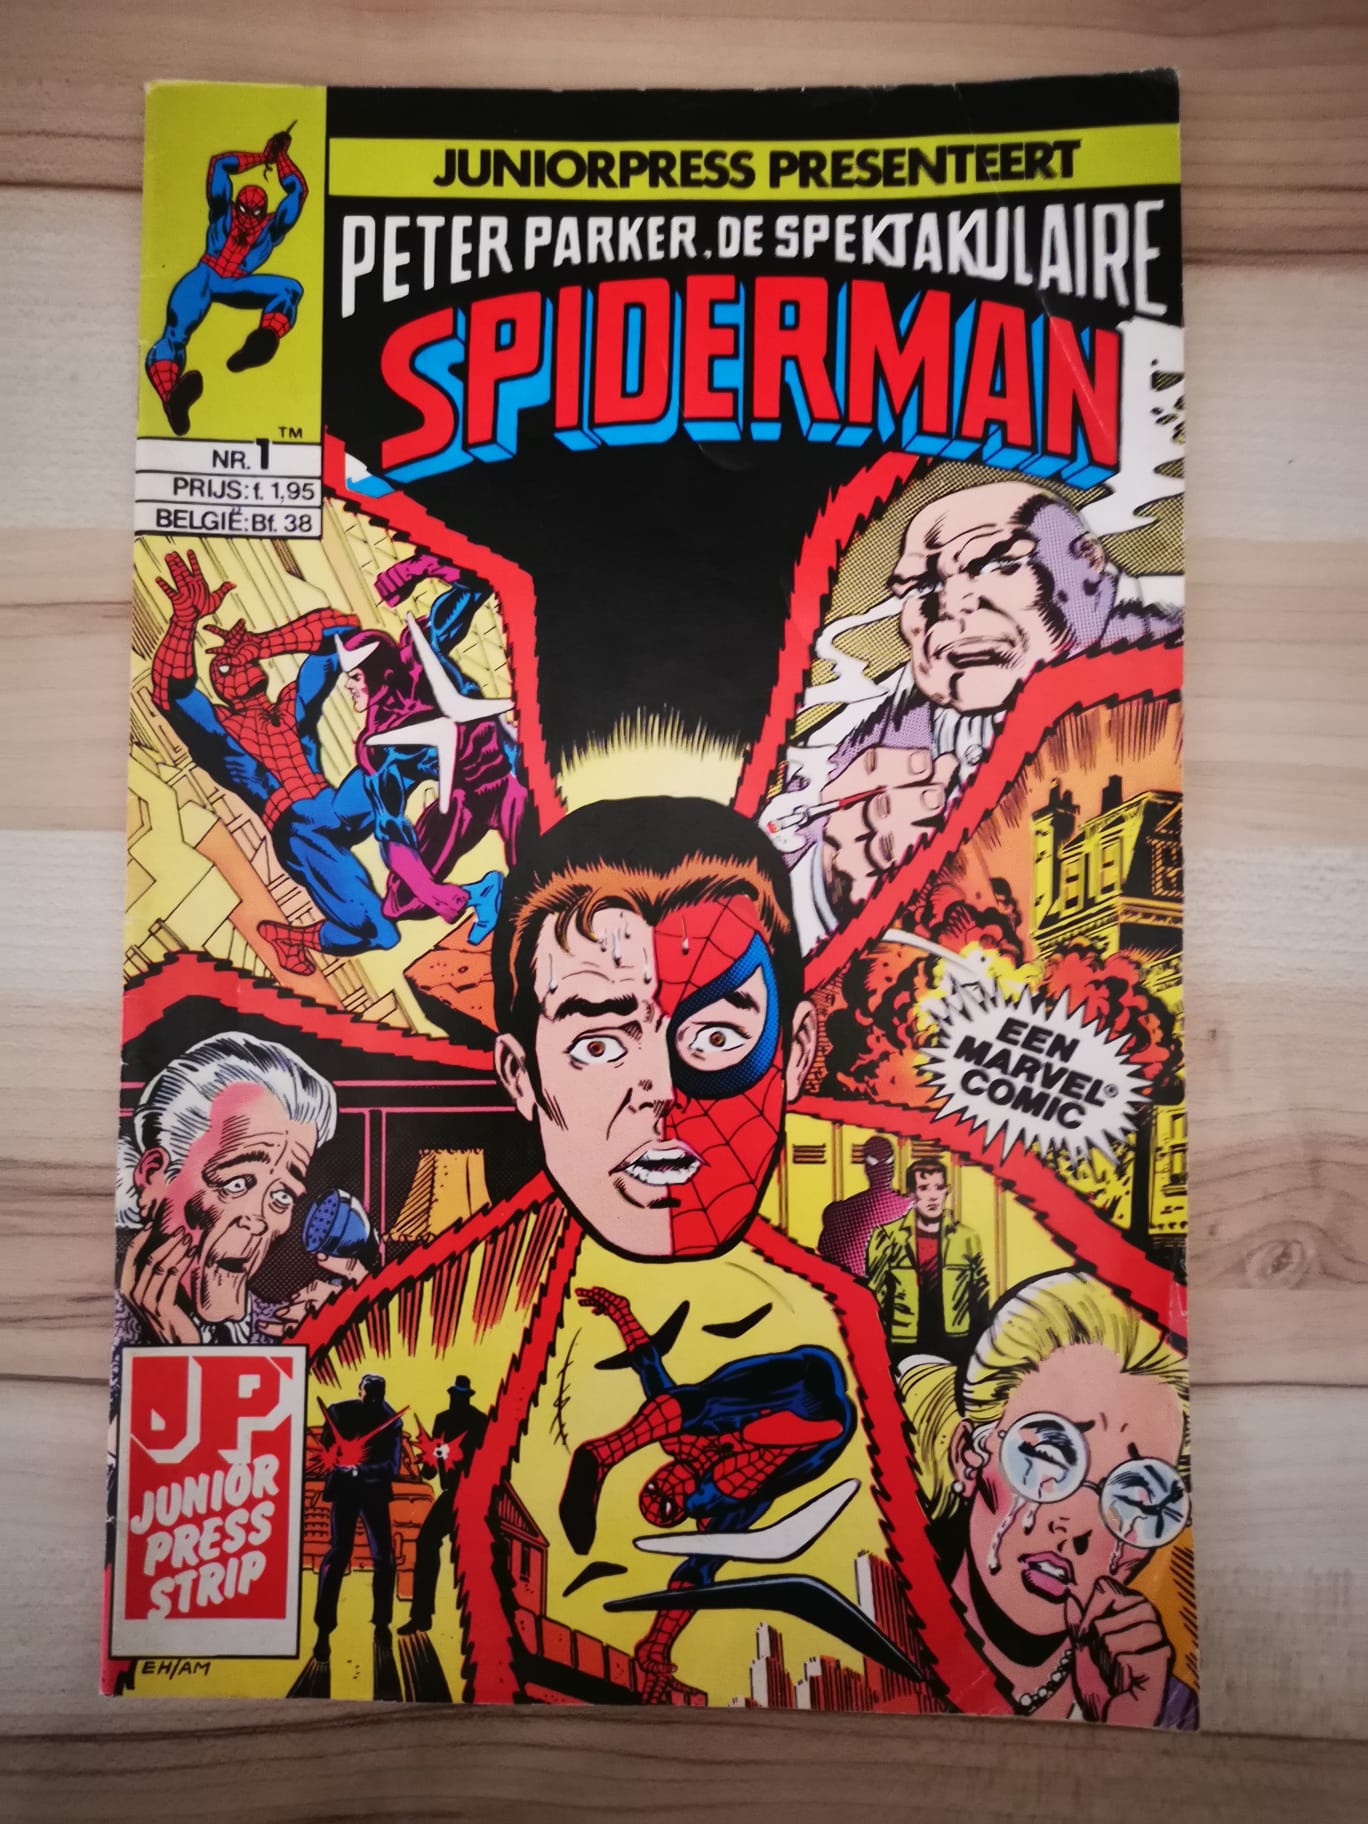 Peter Parker De spektakulaire spiderman #1